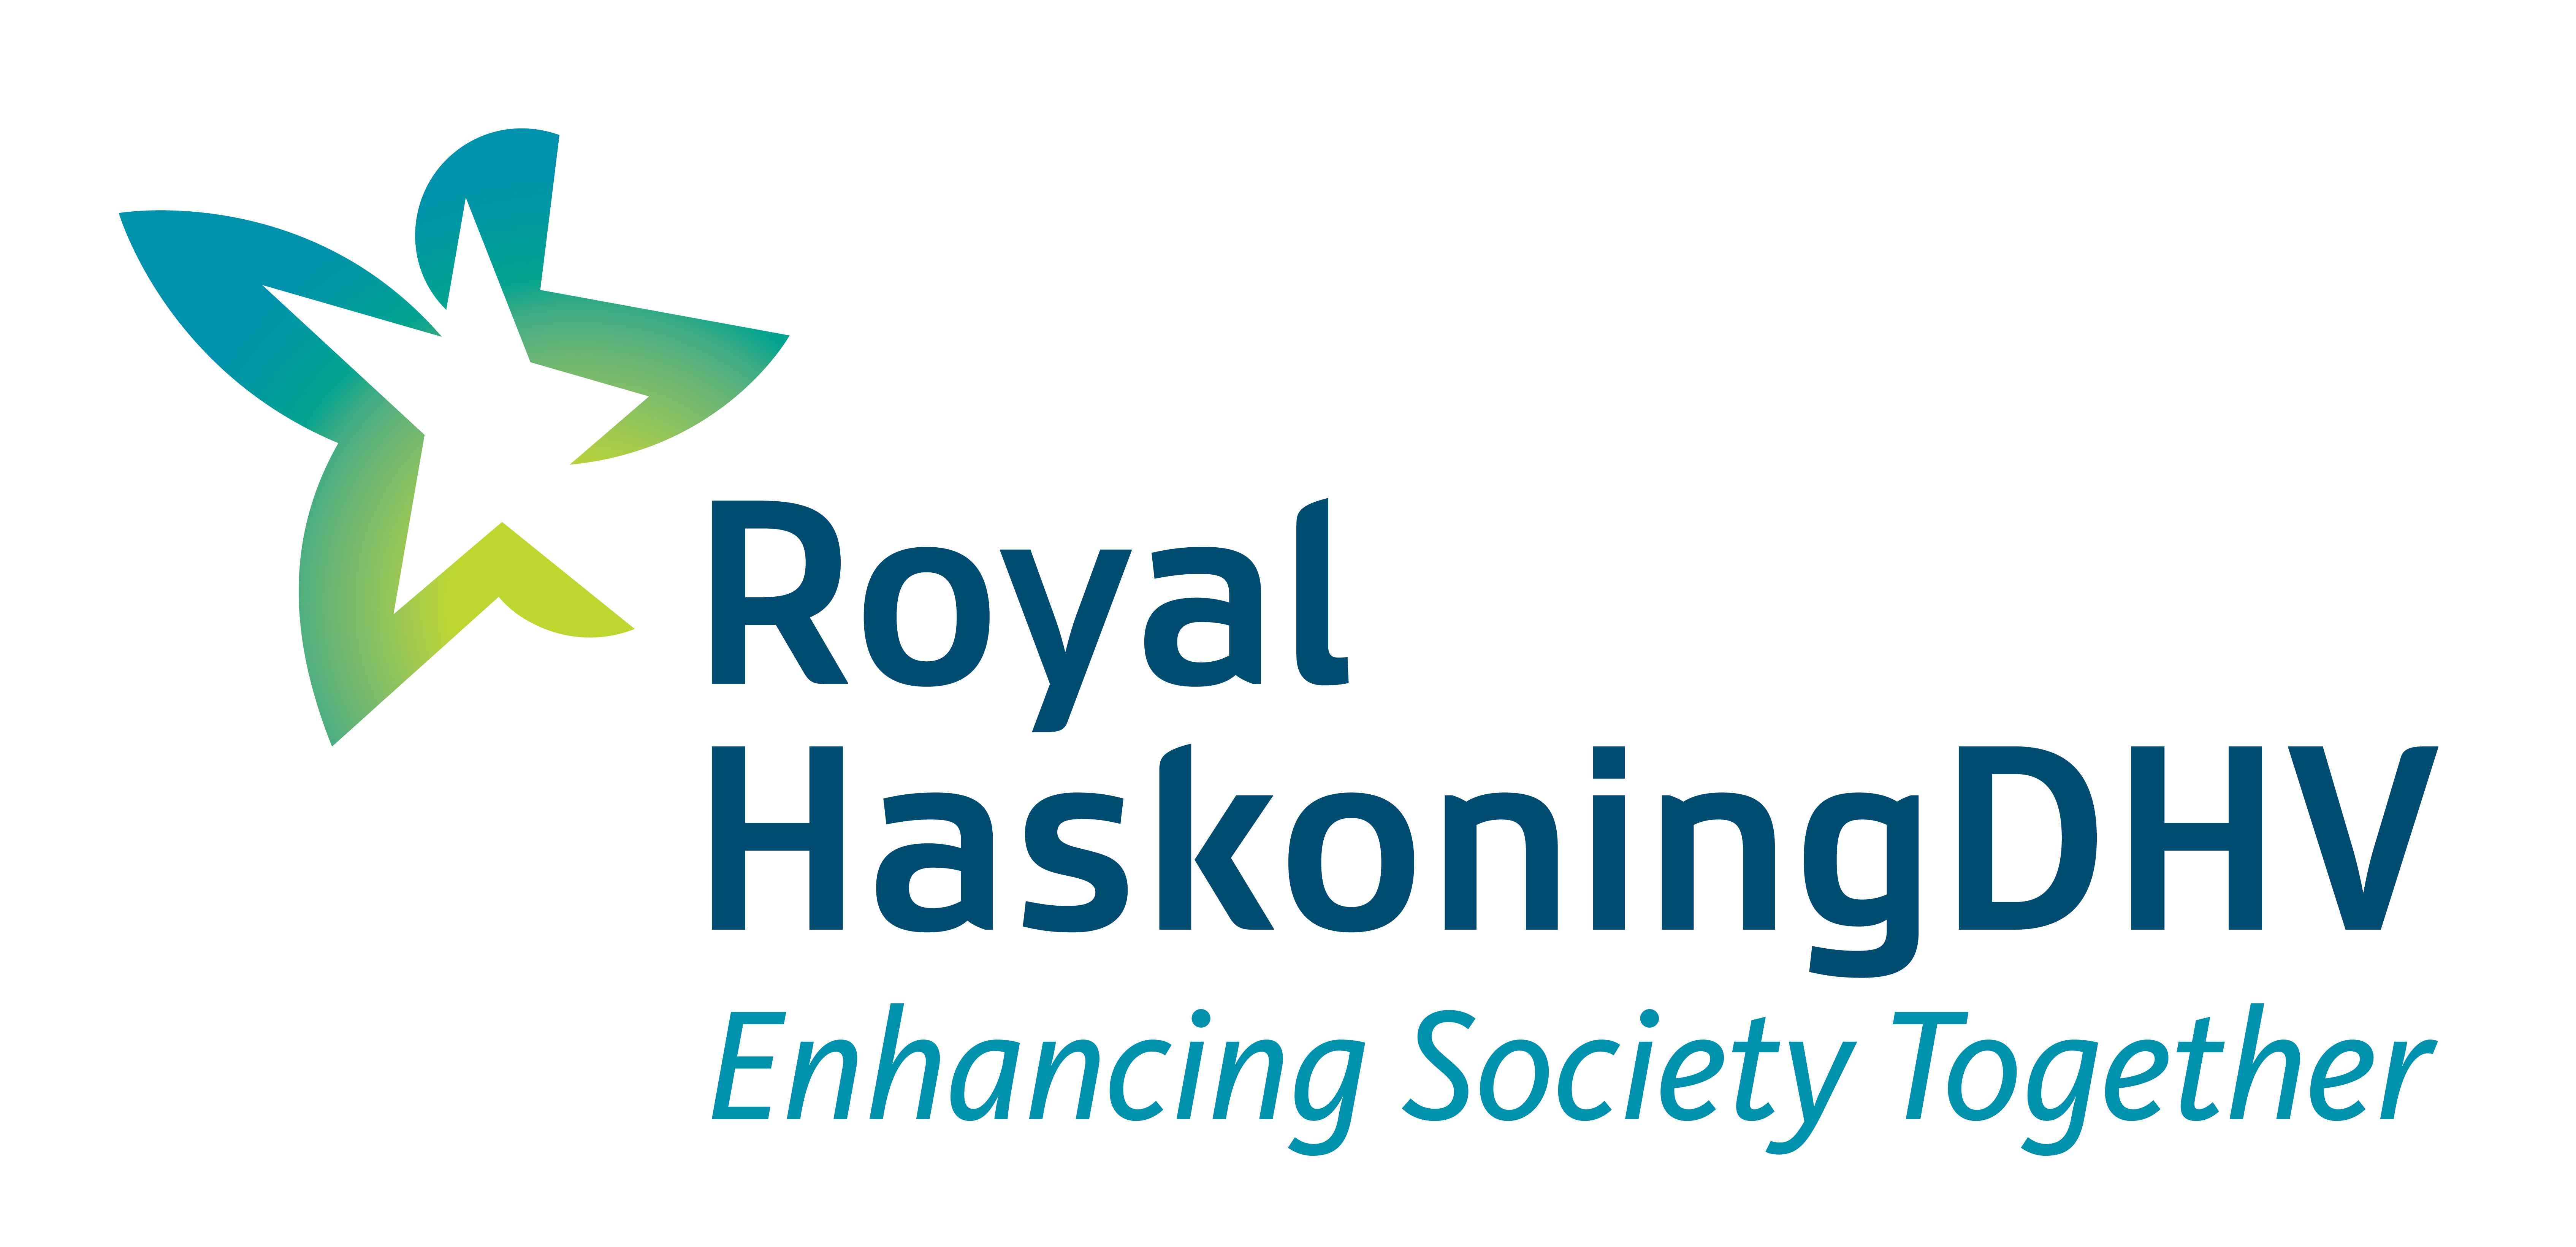 Royal Haskoning DHV relocates their Edinburgh offices